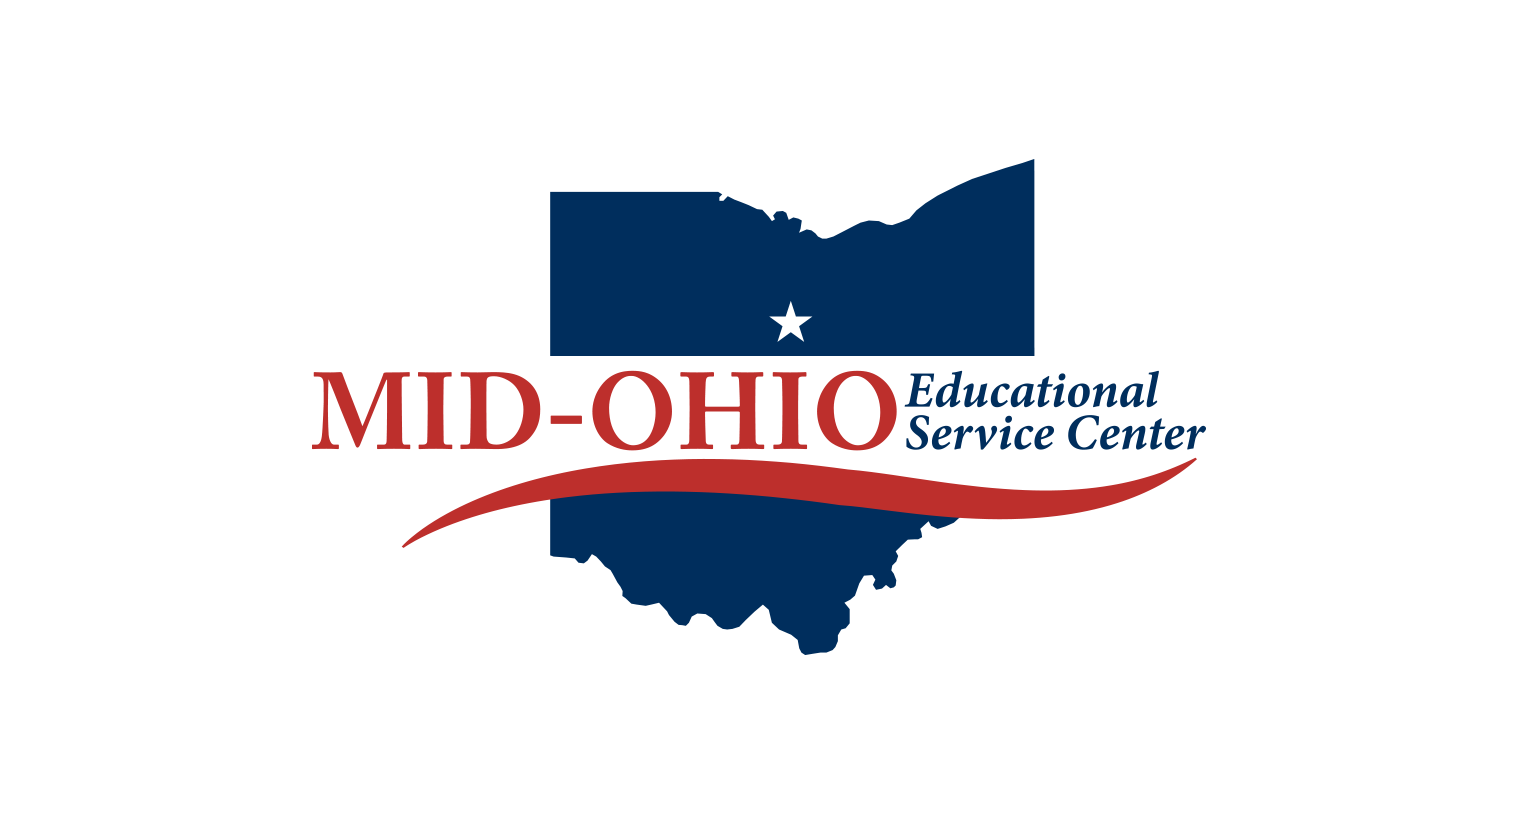 Mid-Ohio ESC Business Advisory Council honored with prestigious three star award